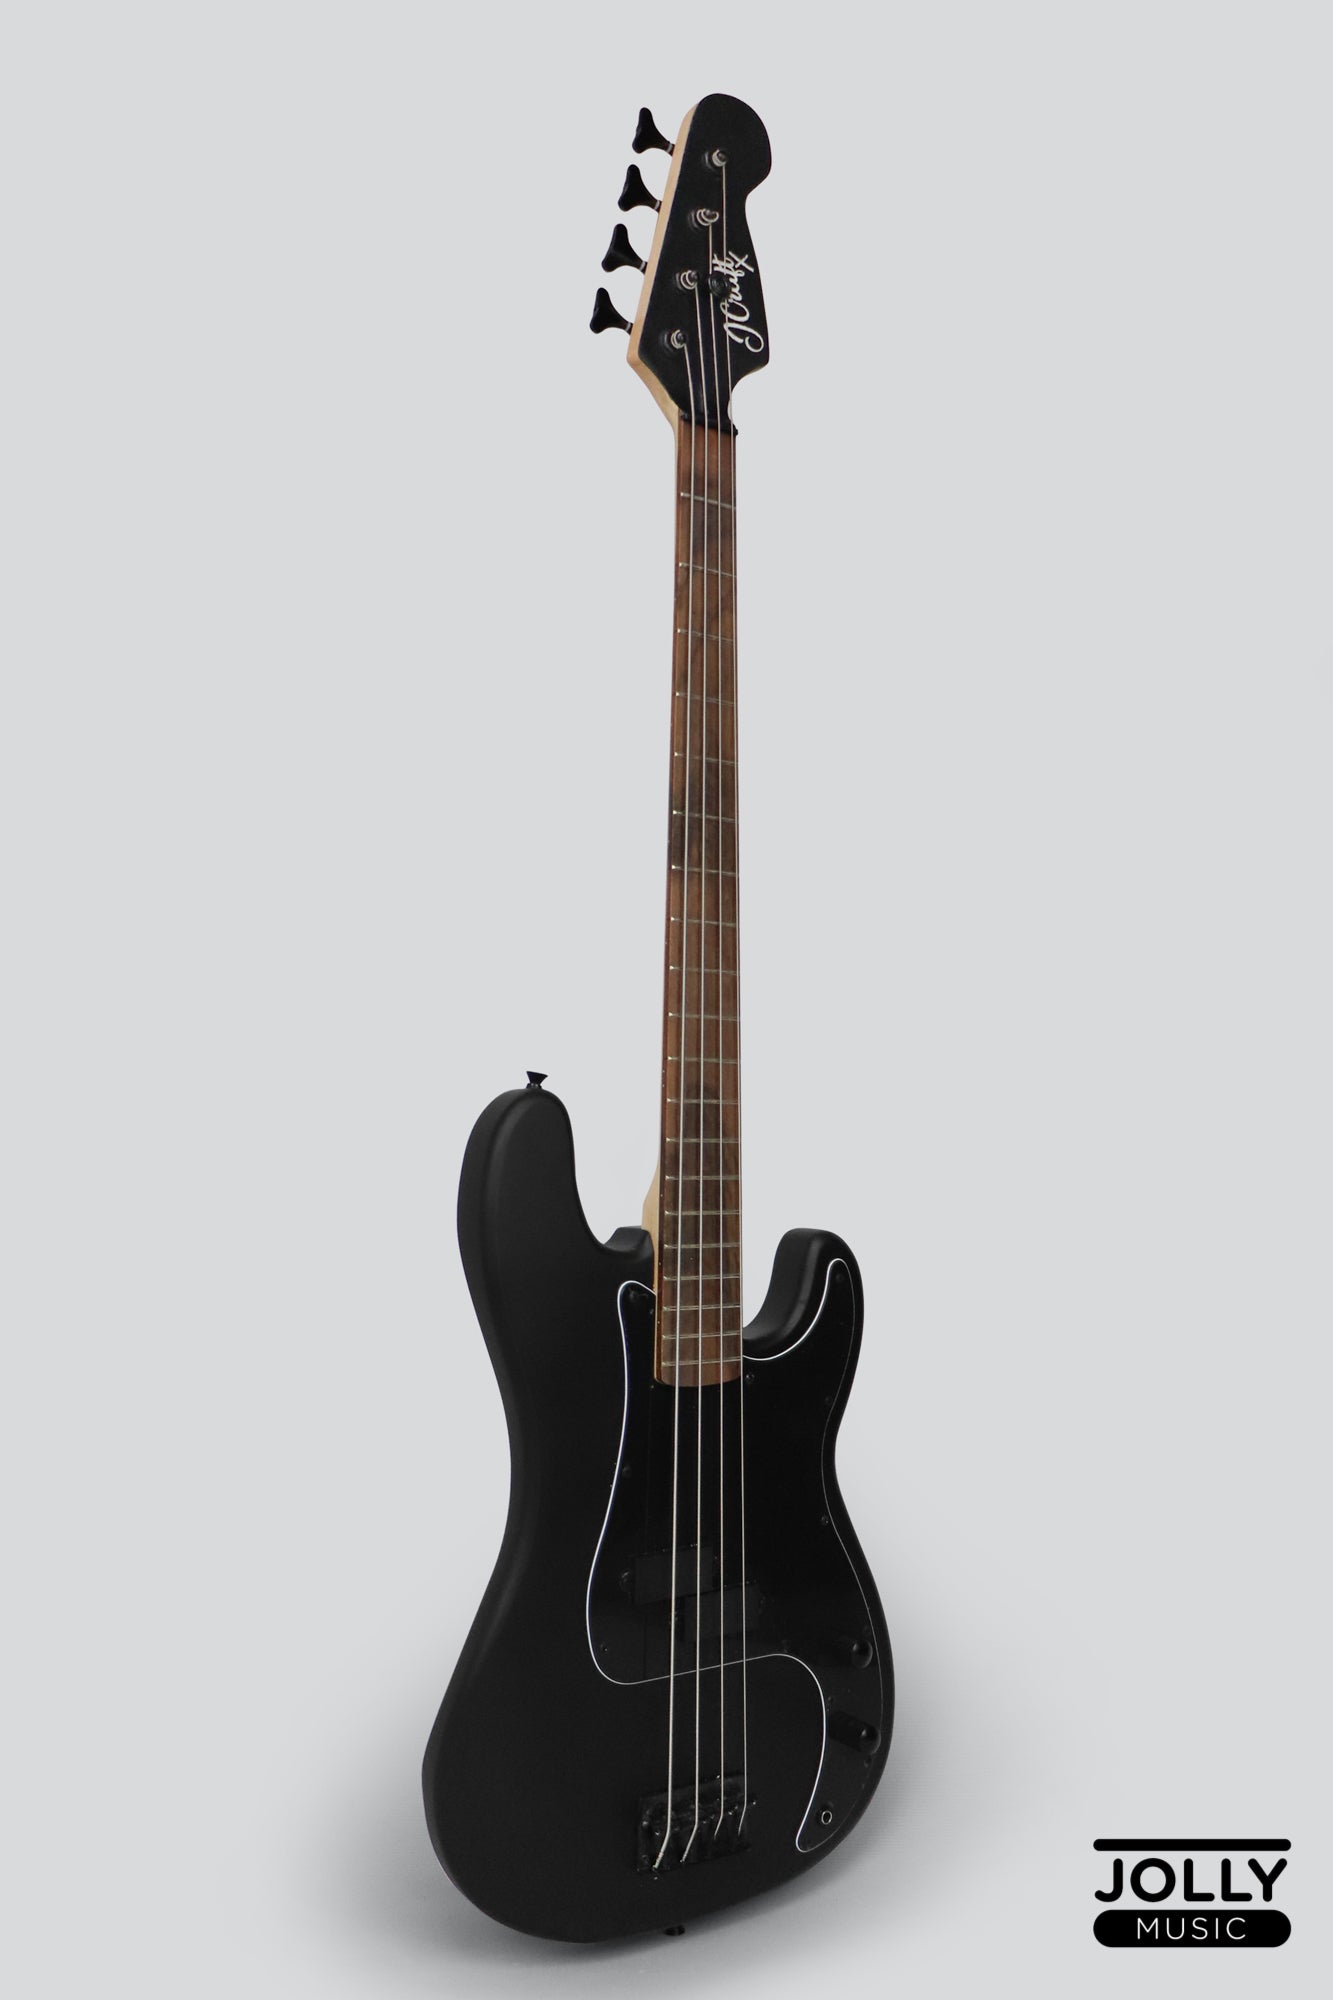 JCraft PBX-1 4-String Electric Bass Guitar with Gigbag - Snow